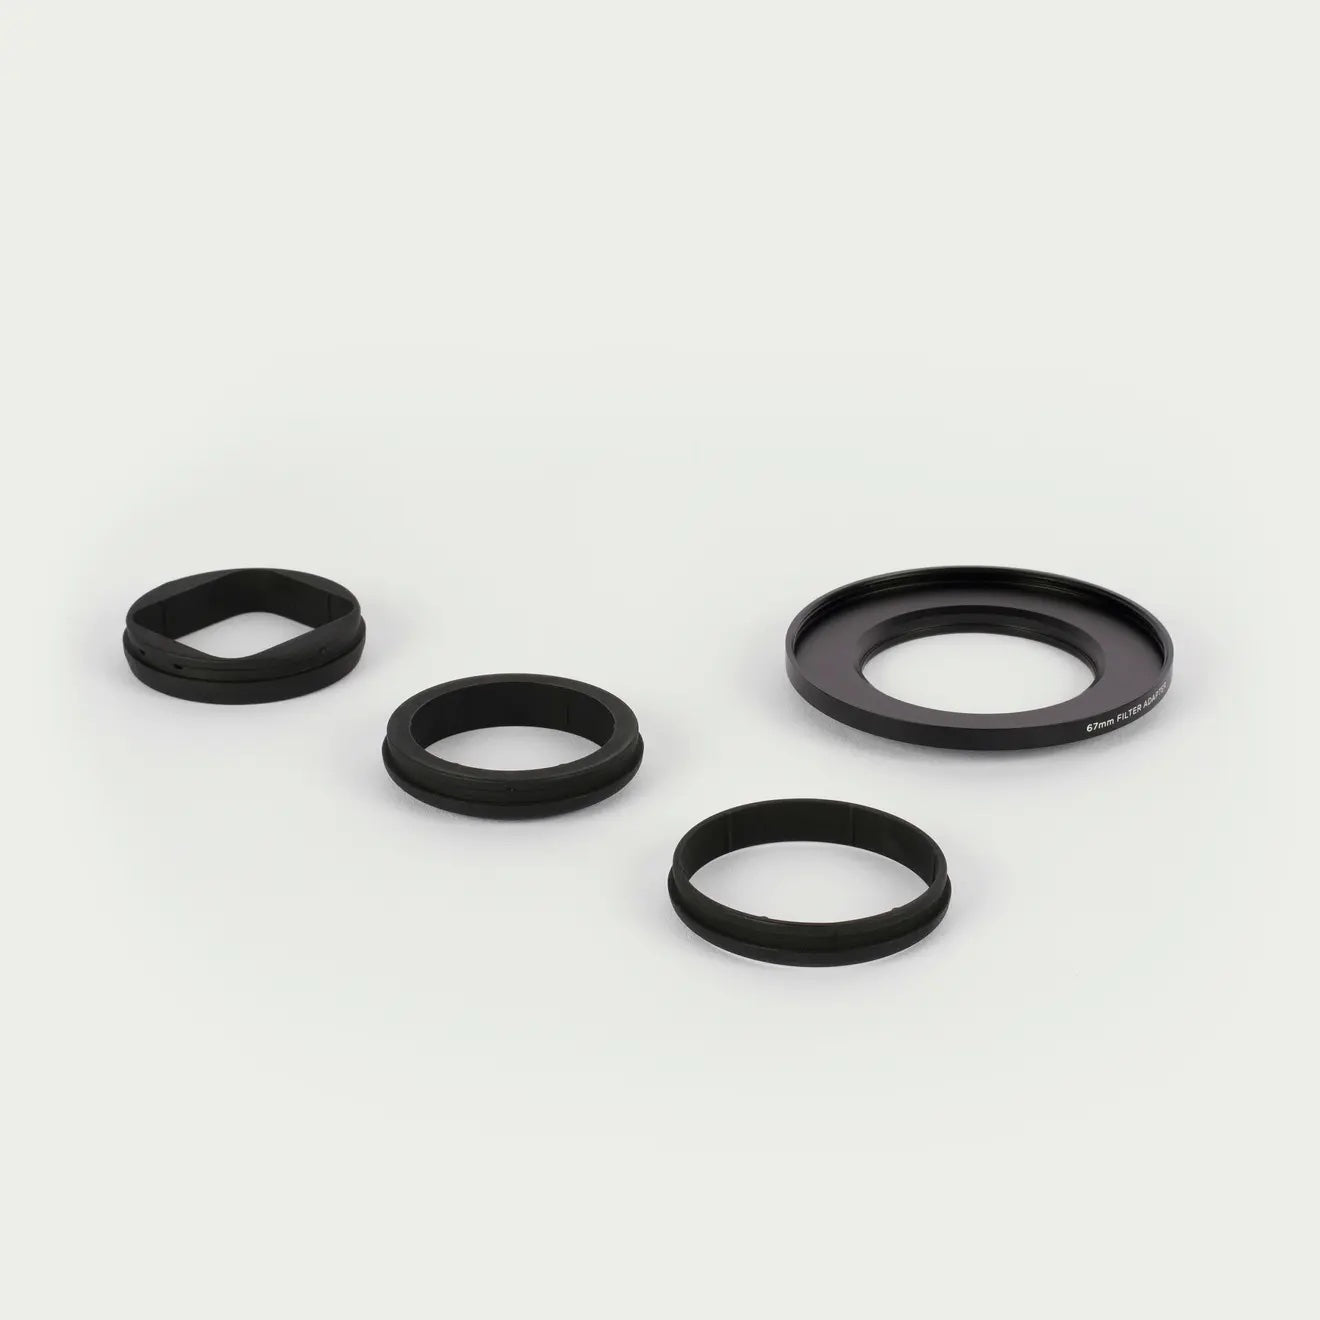 M-Series 67mm Lens Filter Mount Adapter